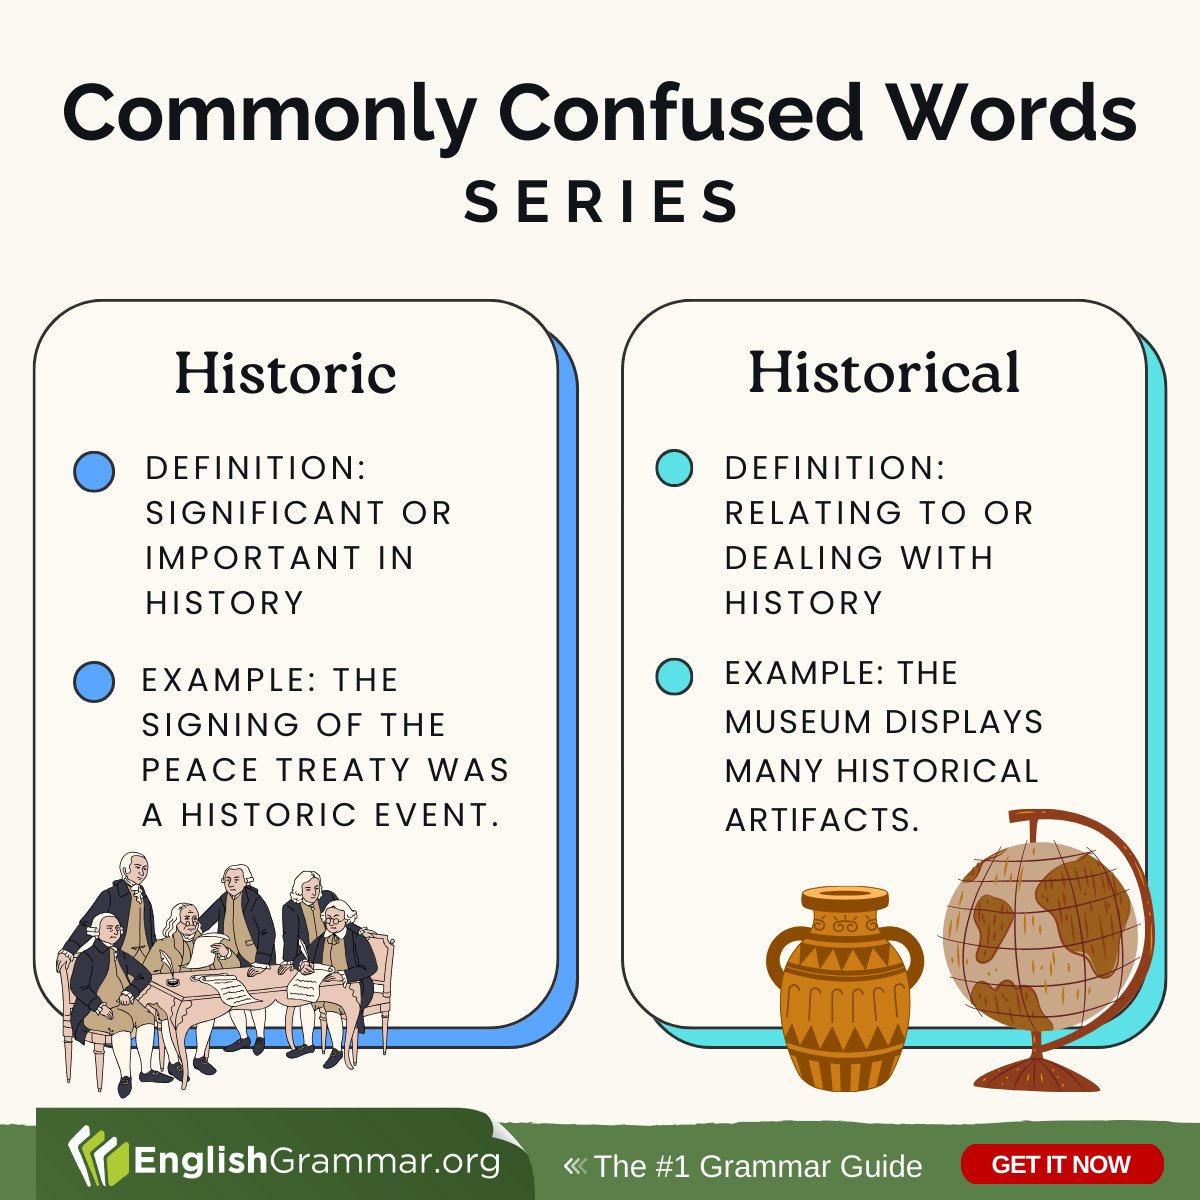 Historic vs. Historical #vocabulary #grammar #amwriting